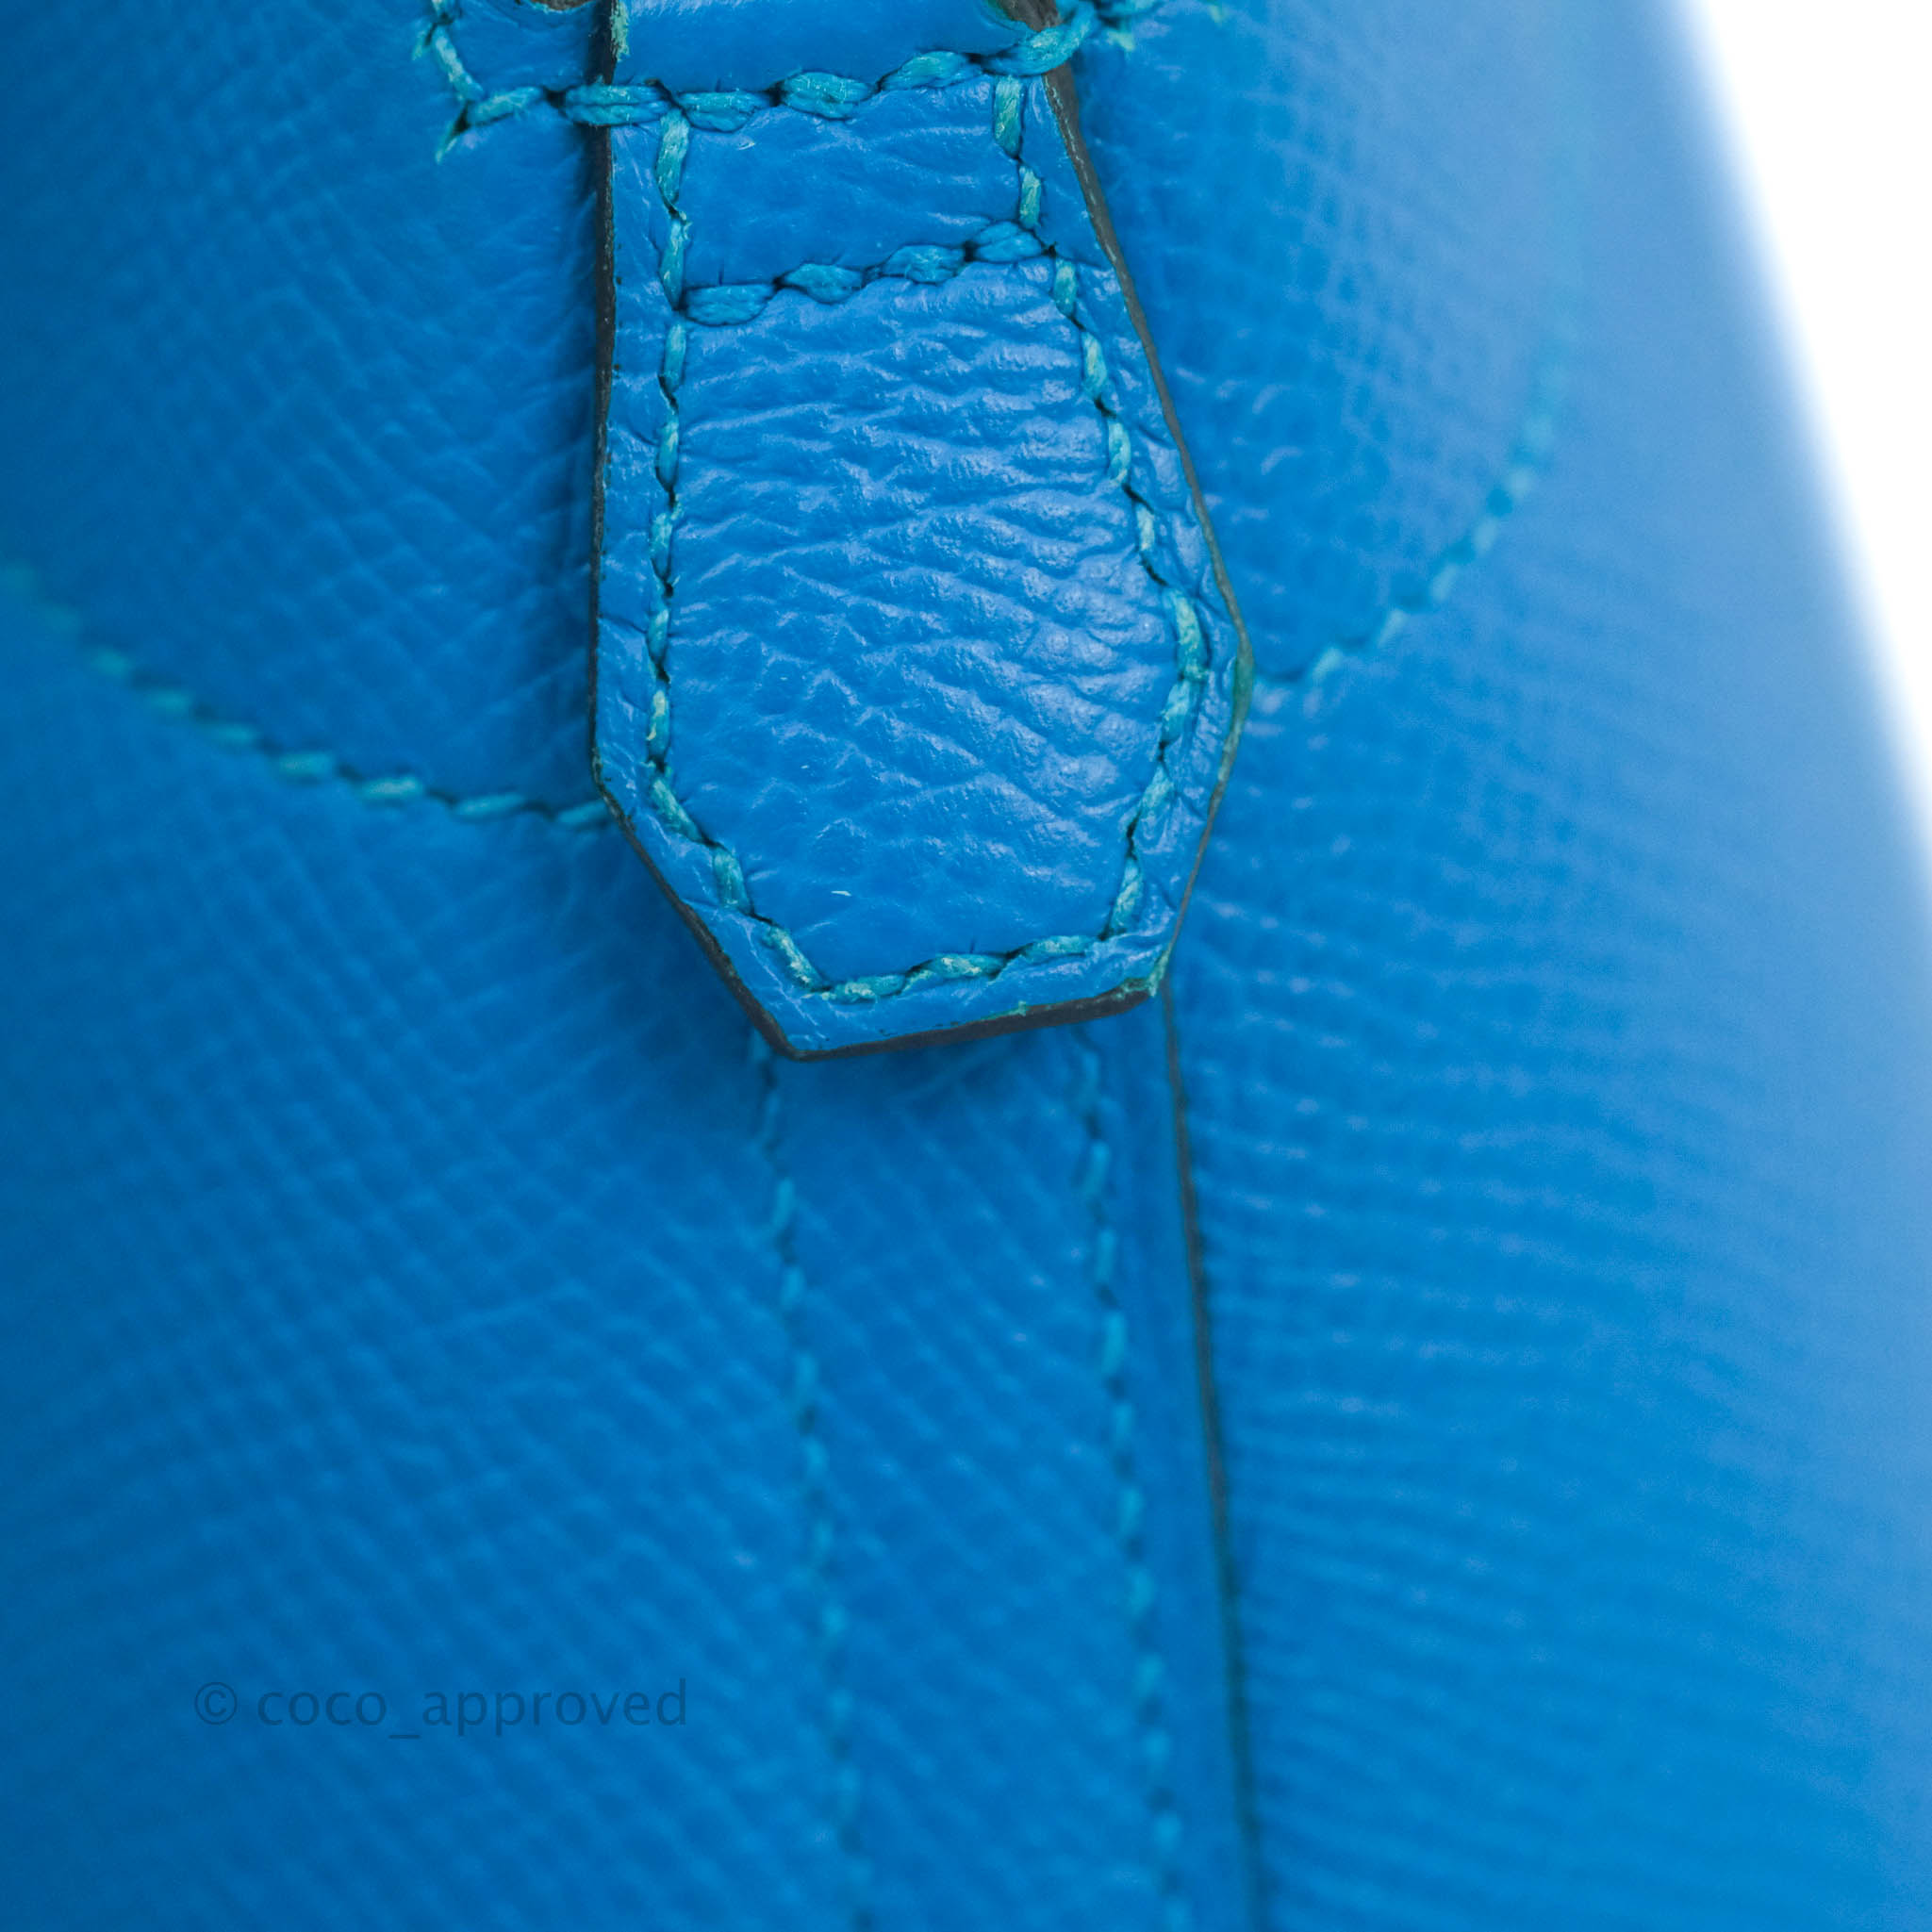 Hermès Bolide 25 Bleu Brume Epsom Palladium Hardware – Coco Approved Studio